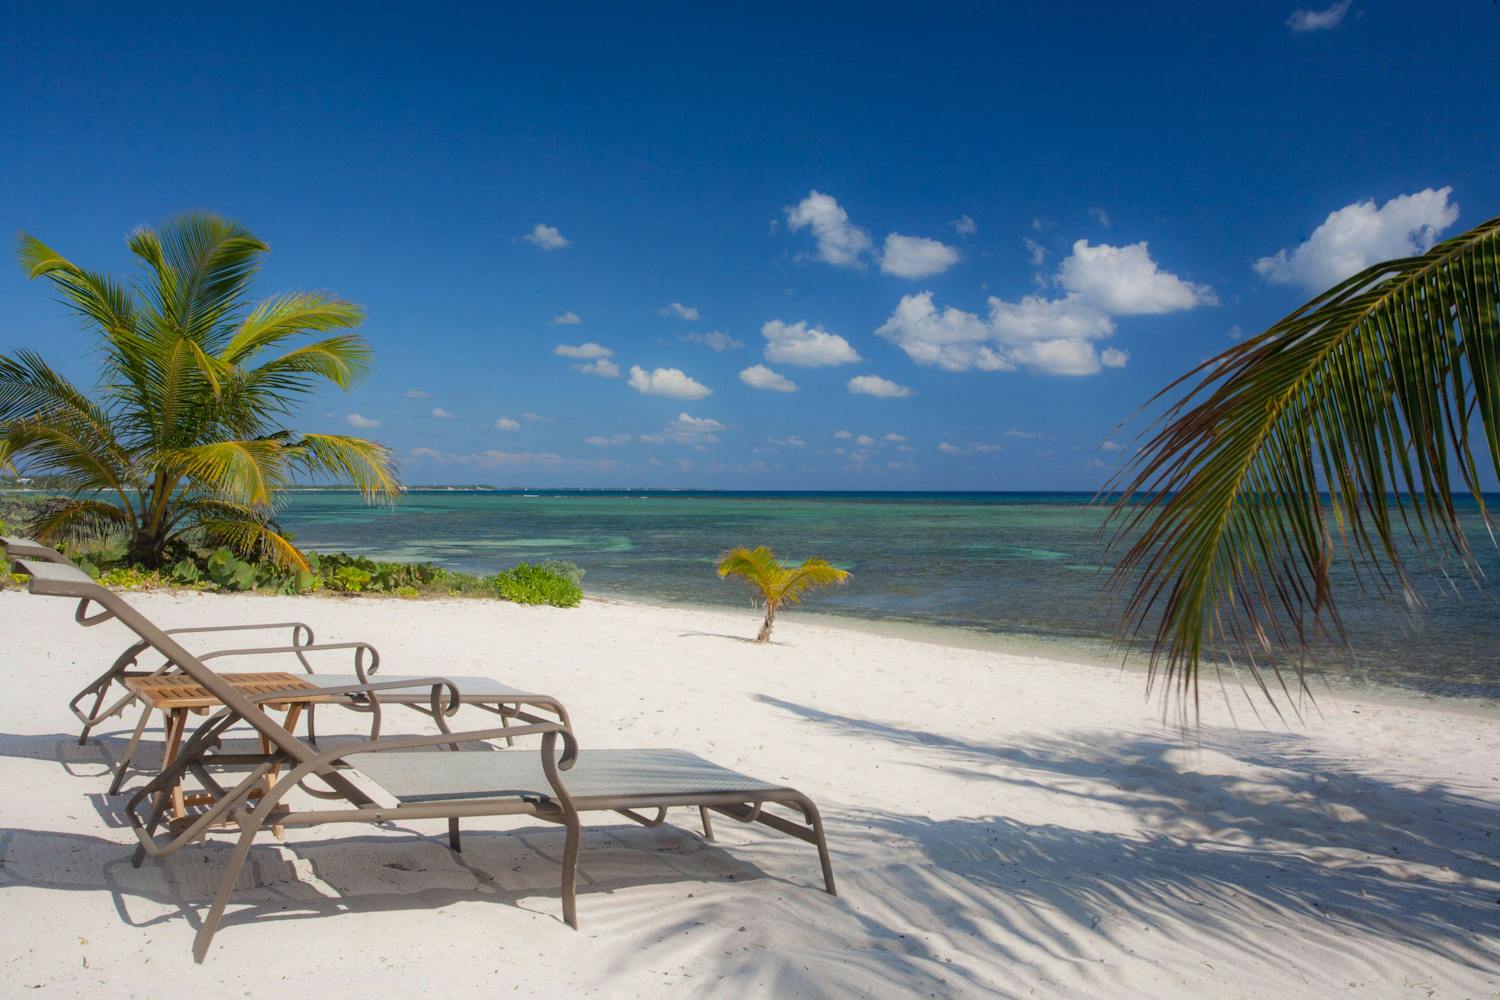 Sun lounger chairs on deserted beach